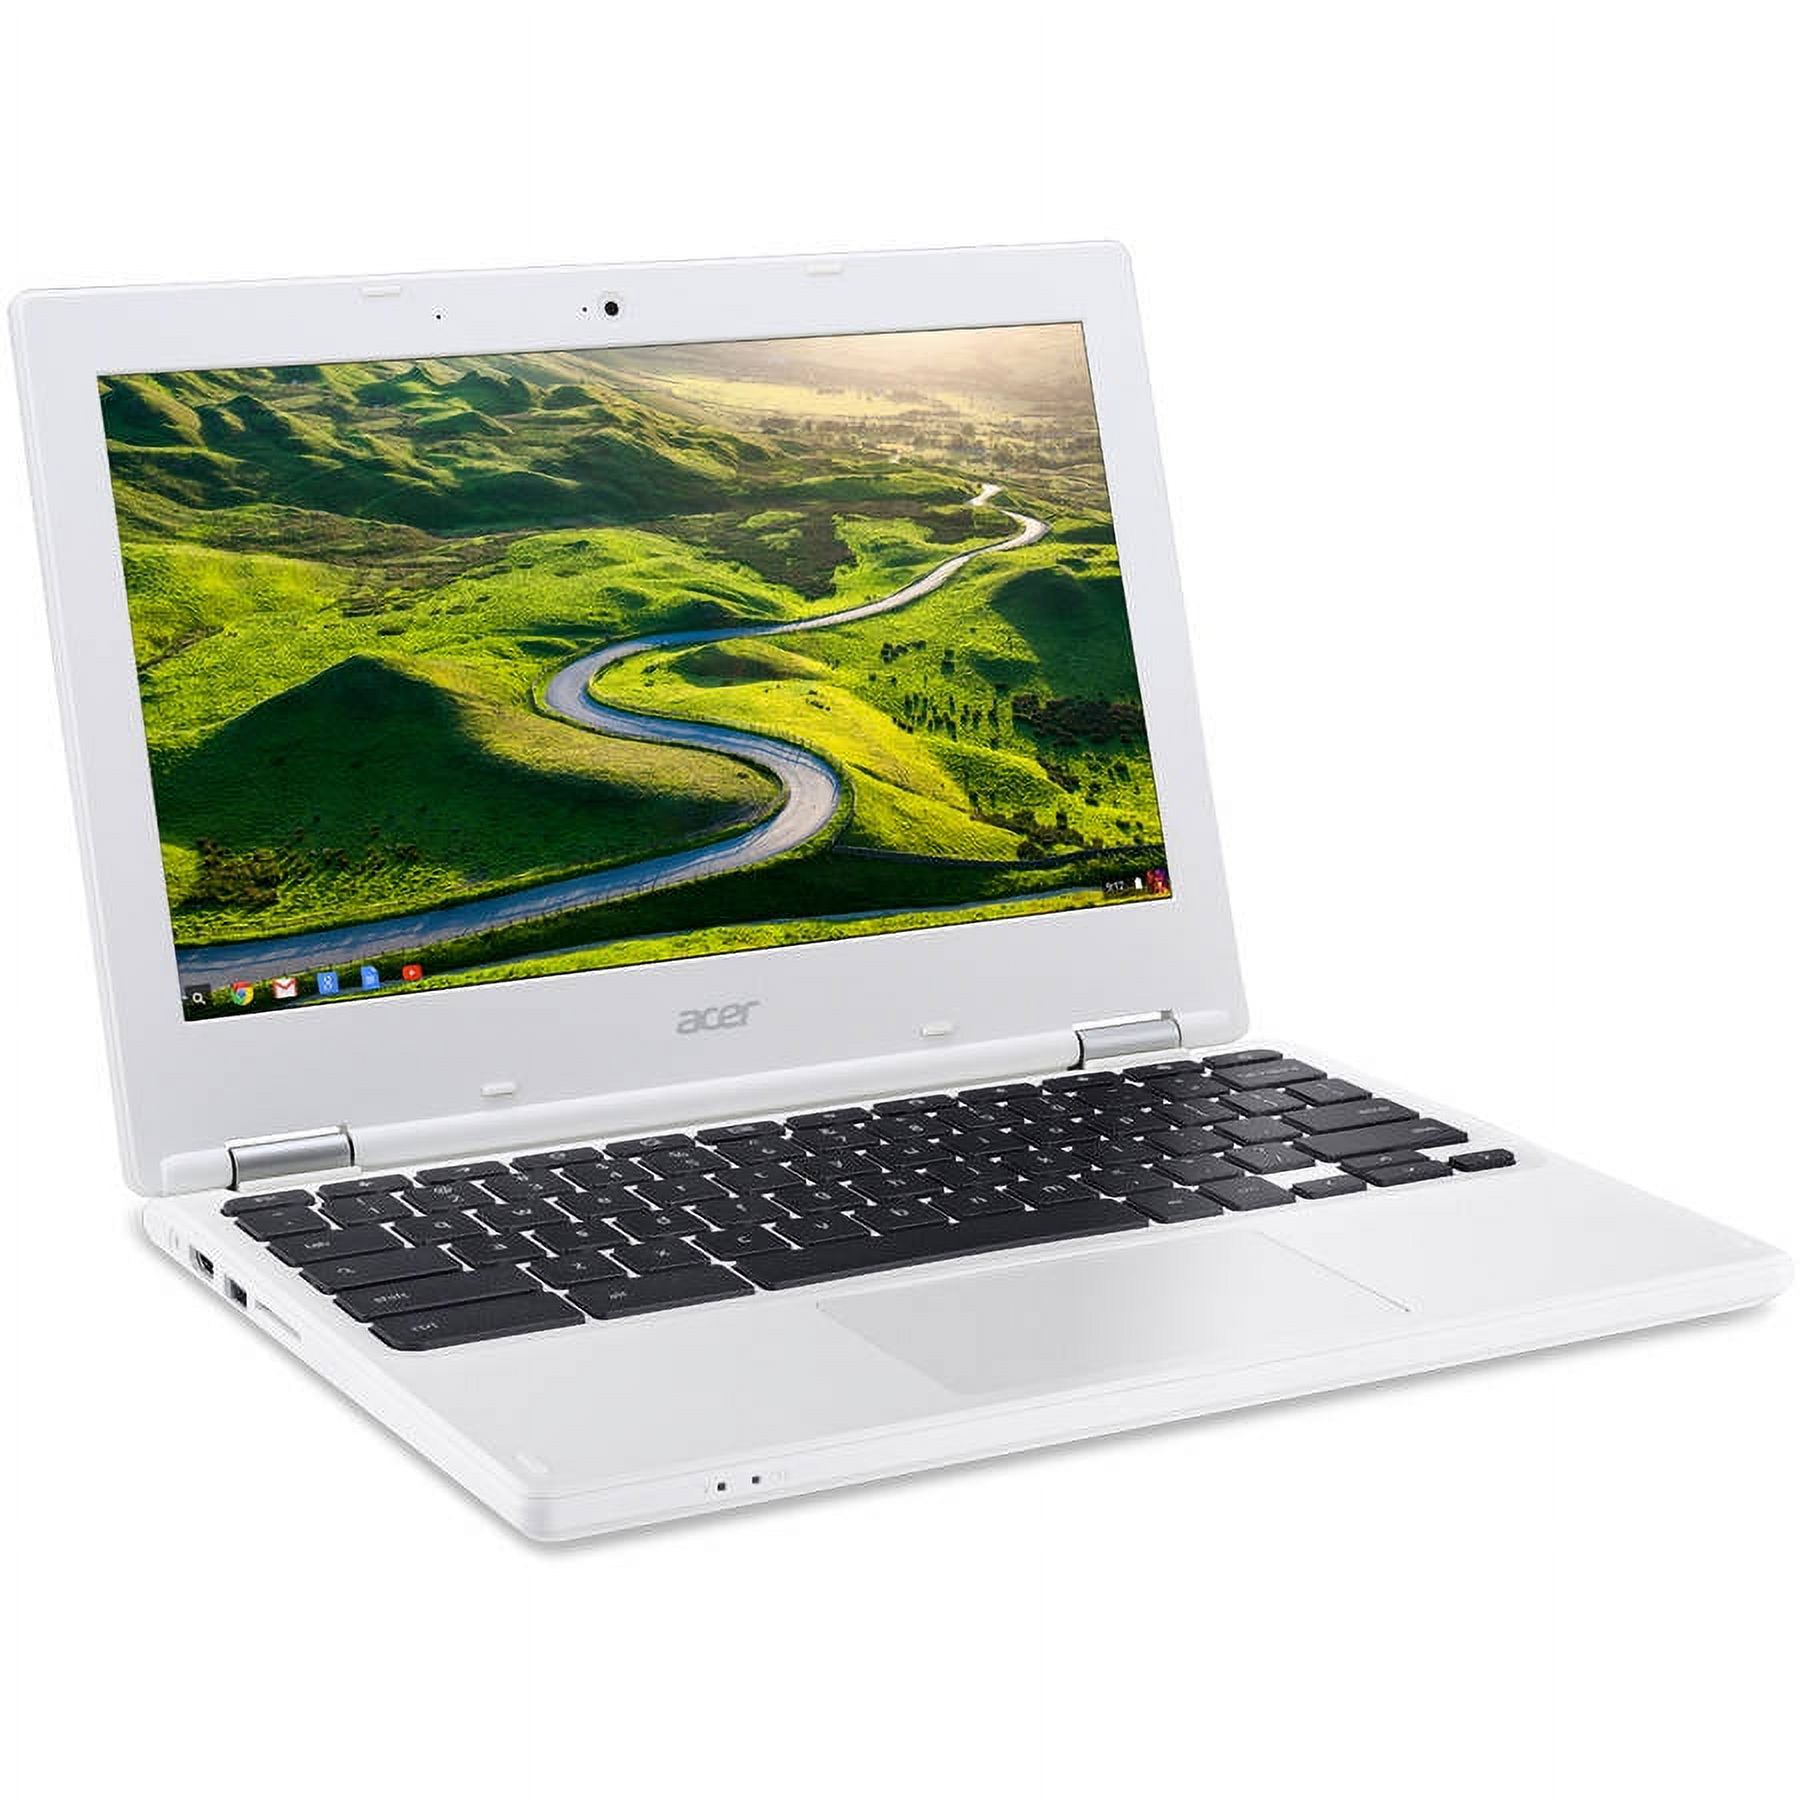 Acer Denim White 11.6" CB3-131-C3SZ Chromebook 11 PC with Intel Celeron N2840 Dual-Core Processor, 2GB Memory, 16GB Flash Storage and Google Chrome - image 1 of 8